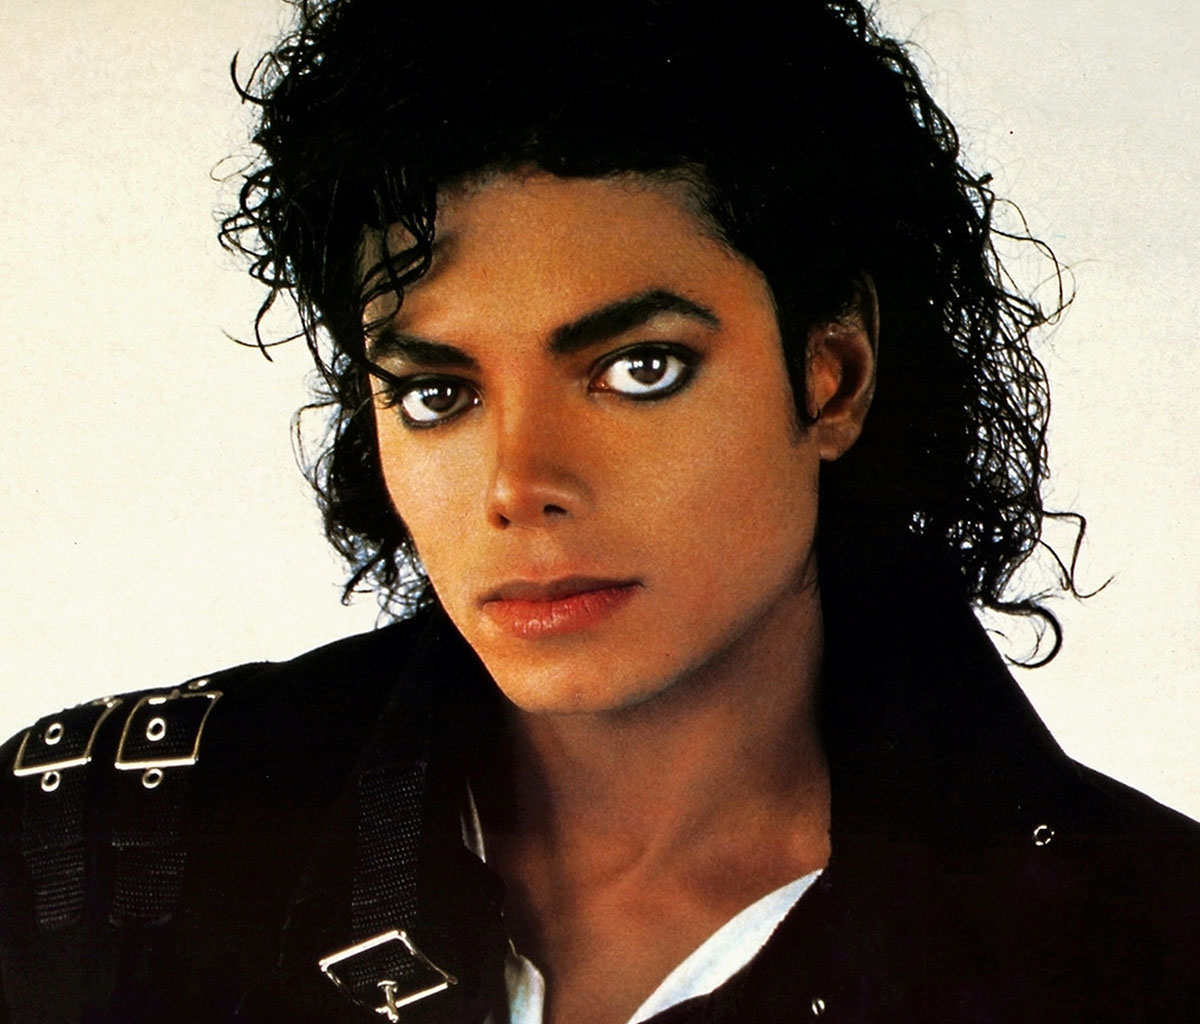 The idol of millions, Michael Jackson